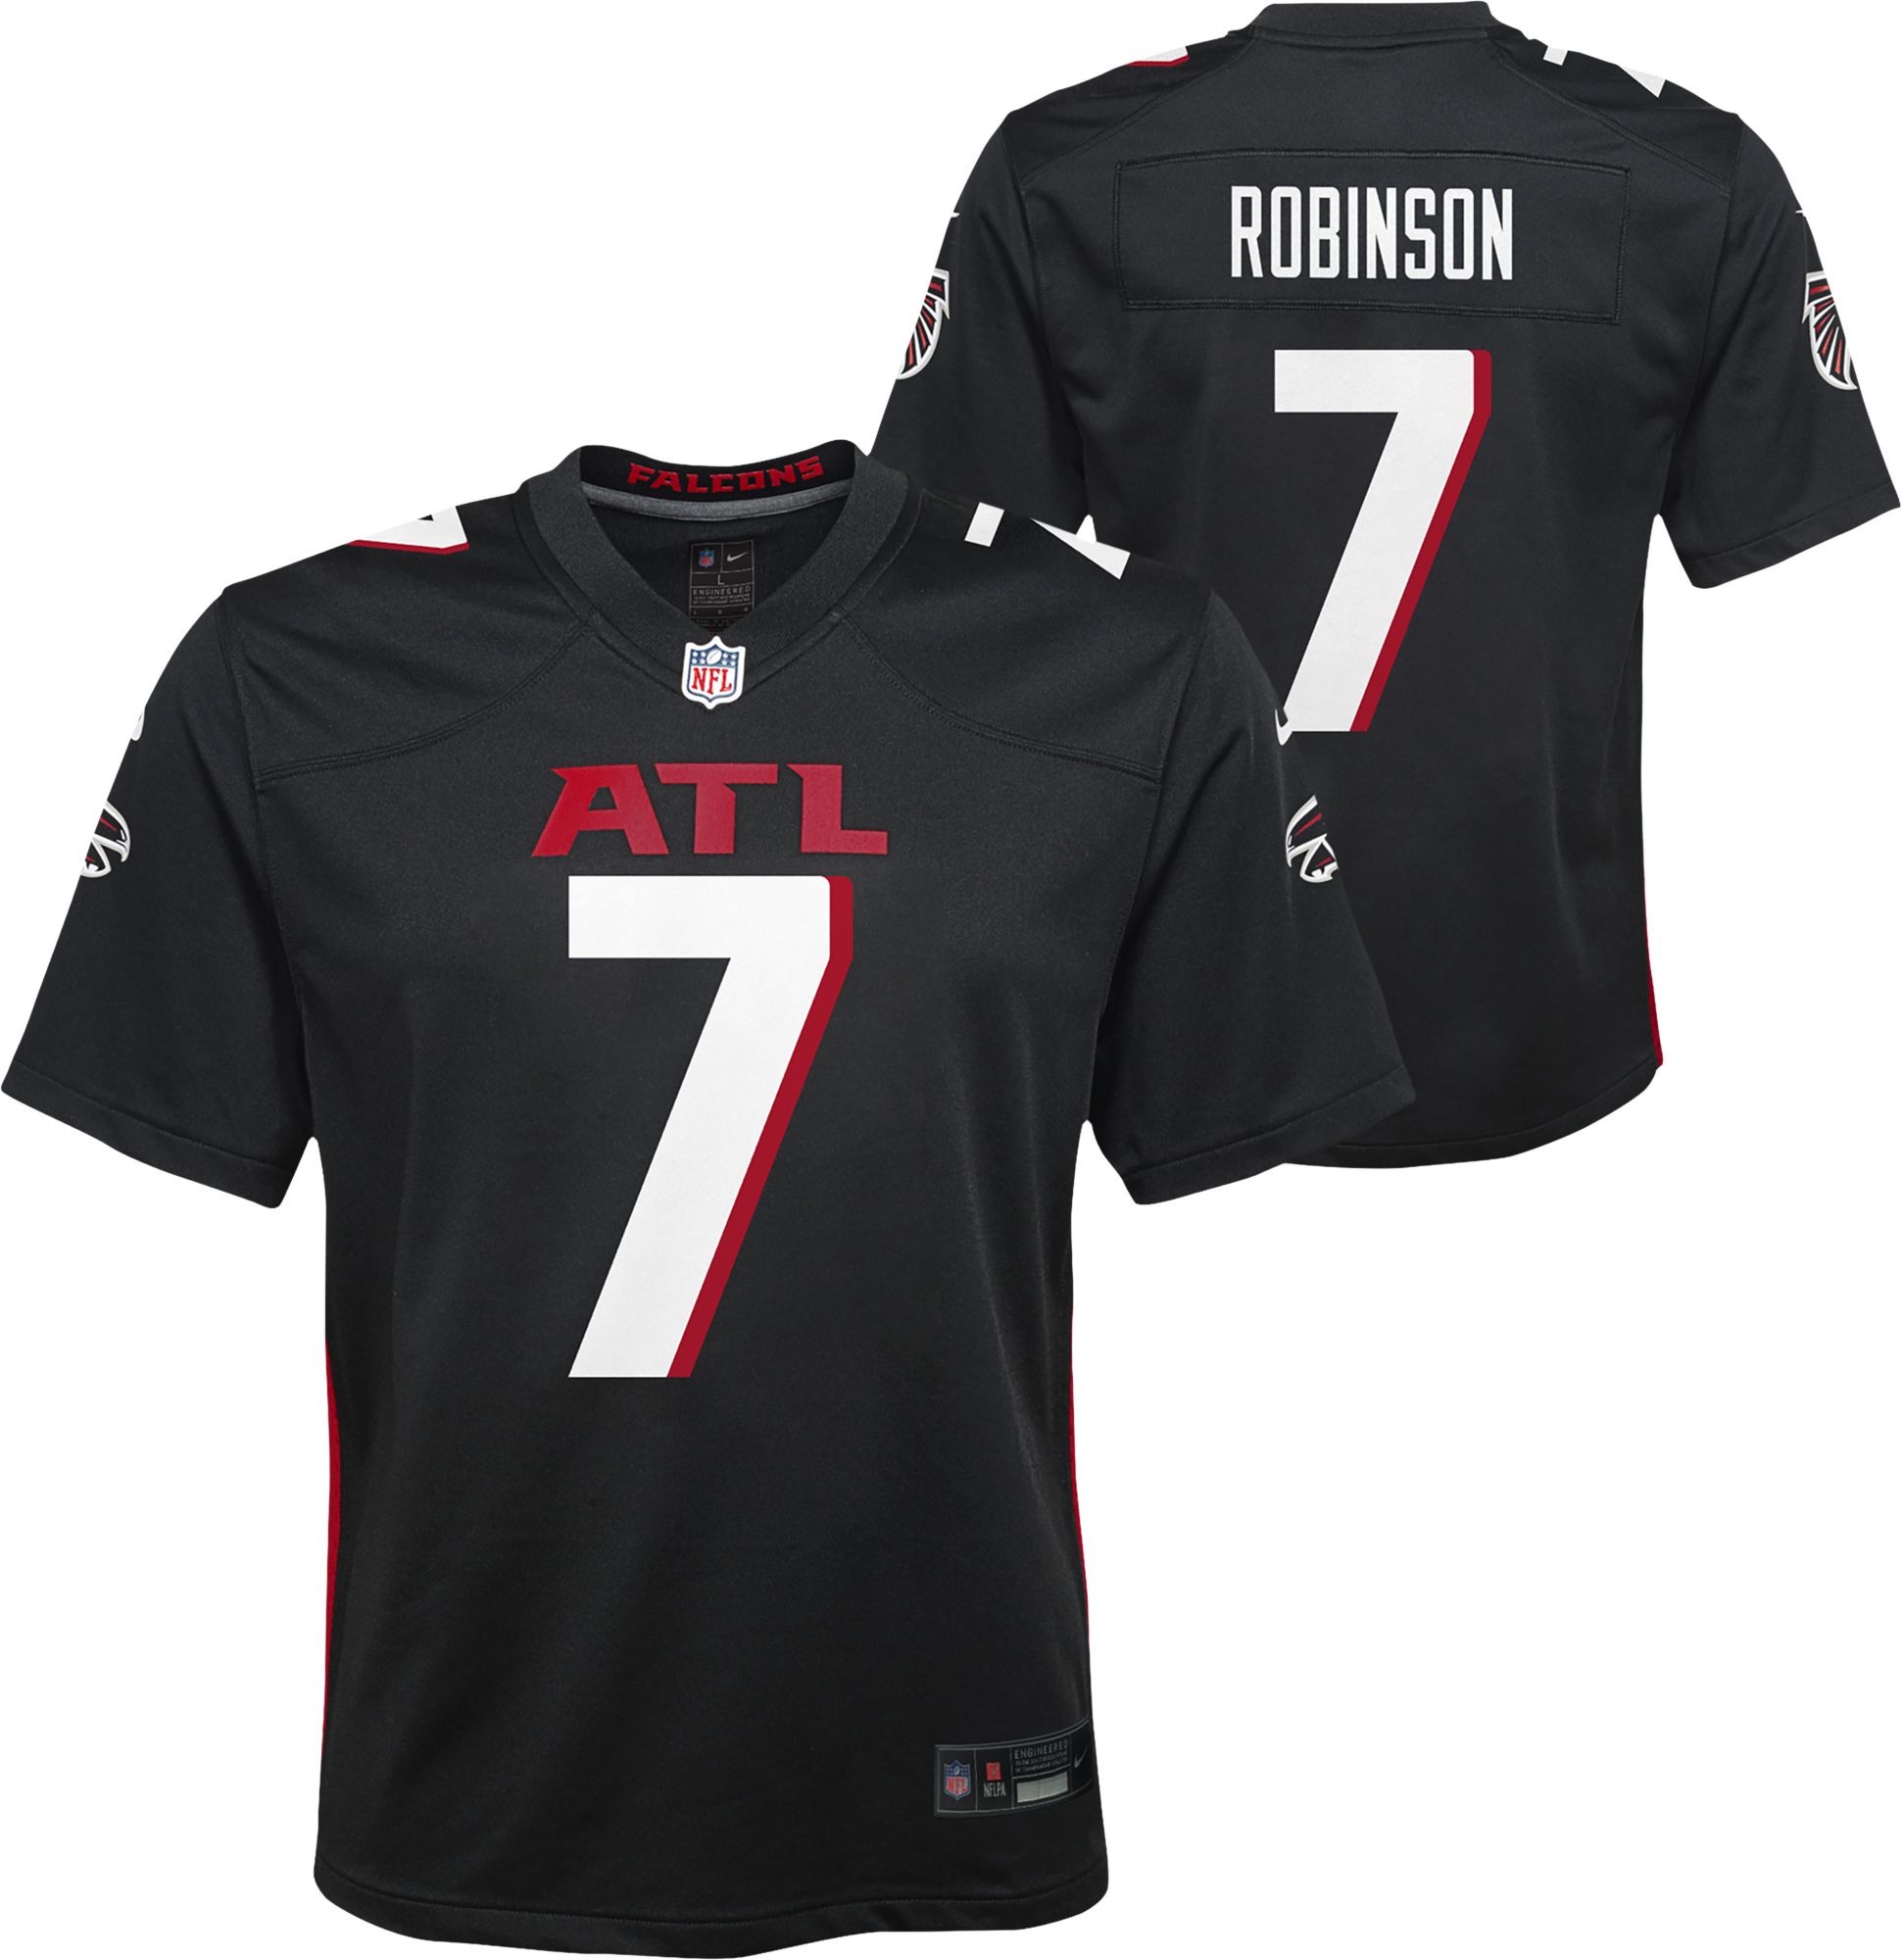 Atlanta Falcons jersey merchandise